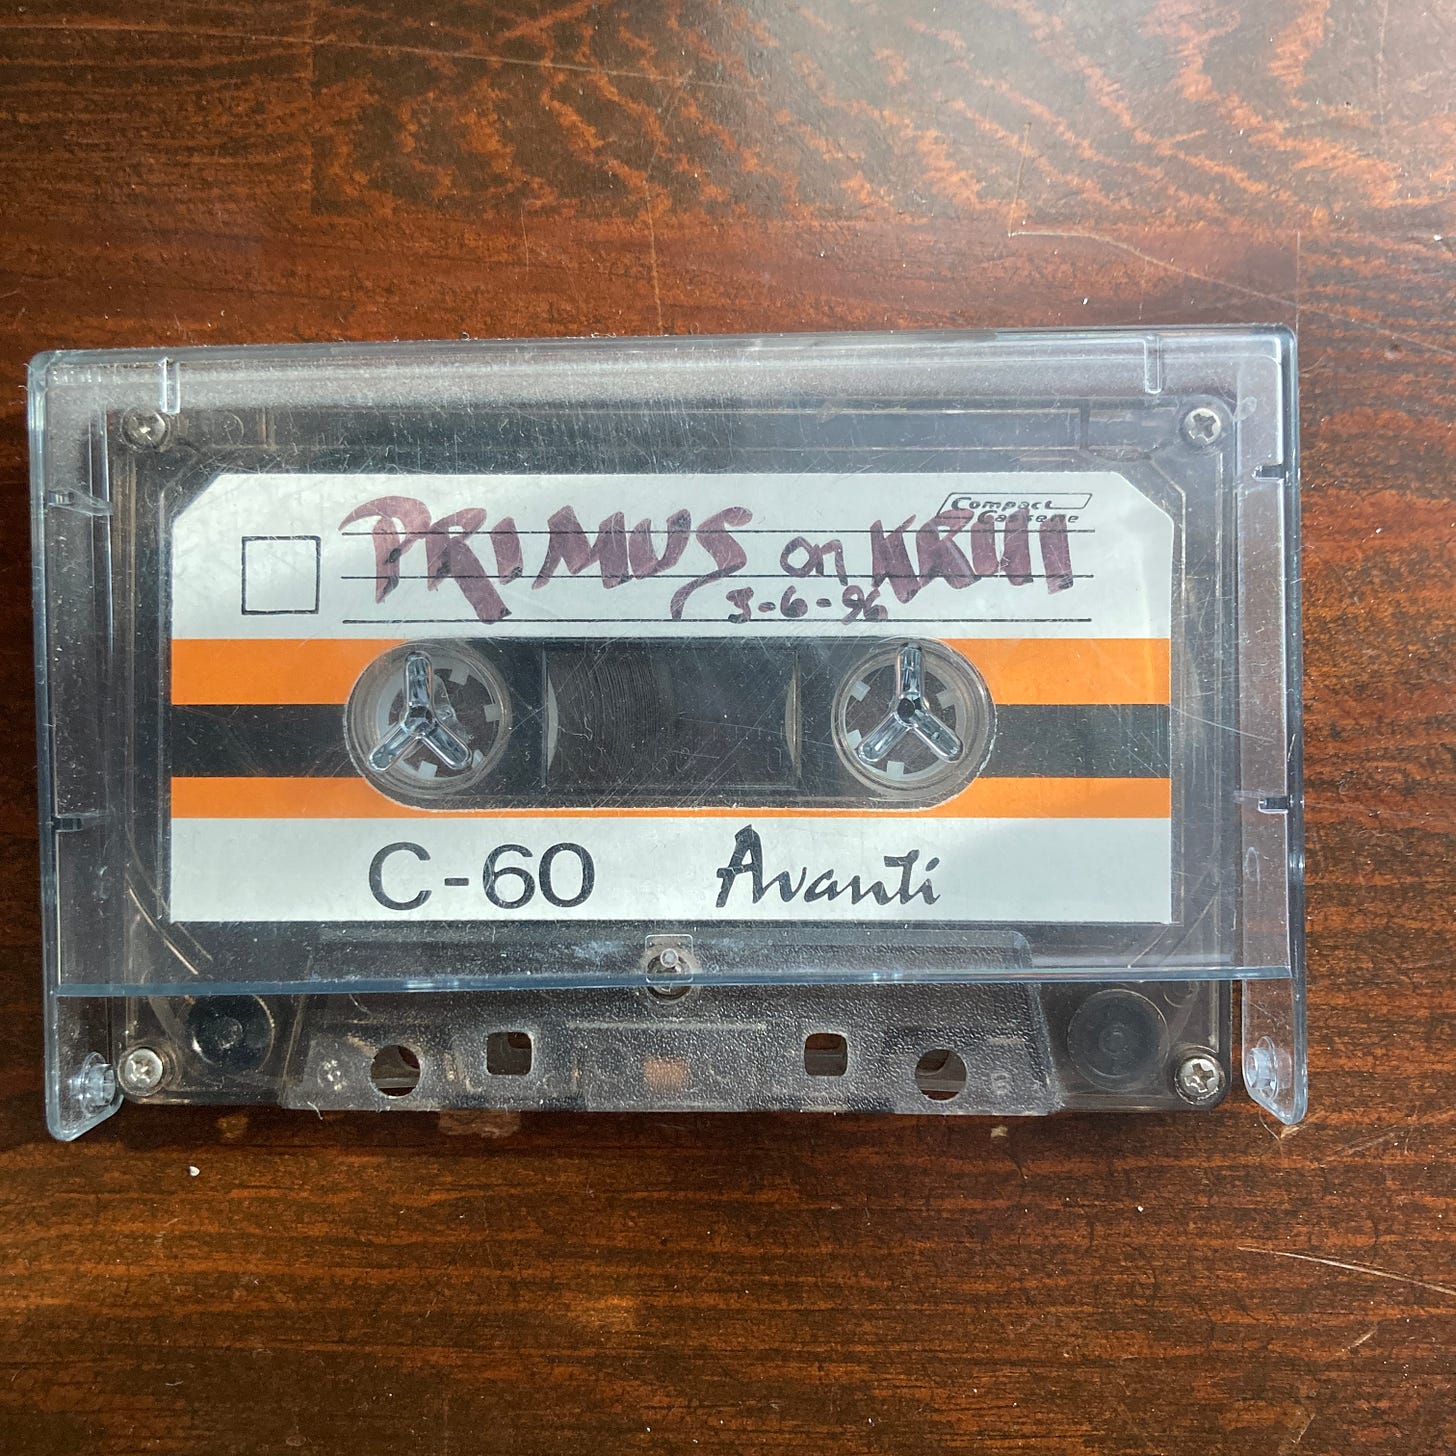 C-60 Avanti cassette tape | PRIMUS on KRUI 3-6-96